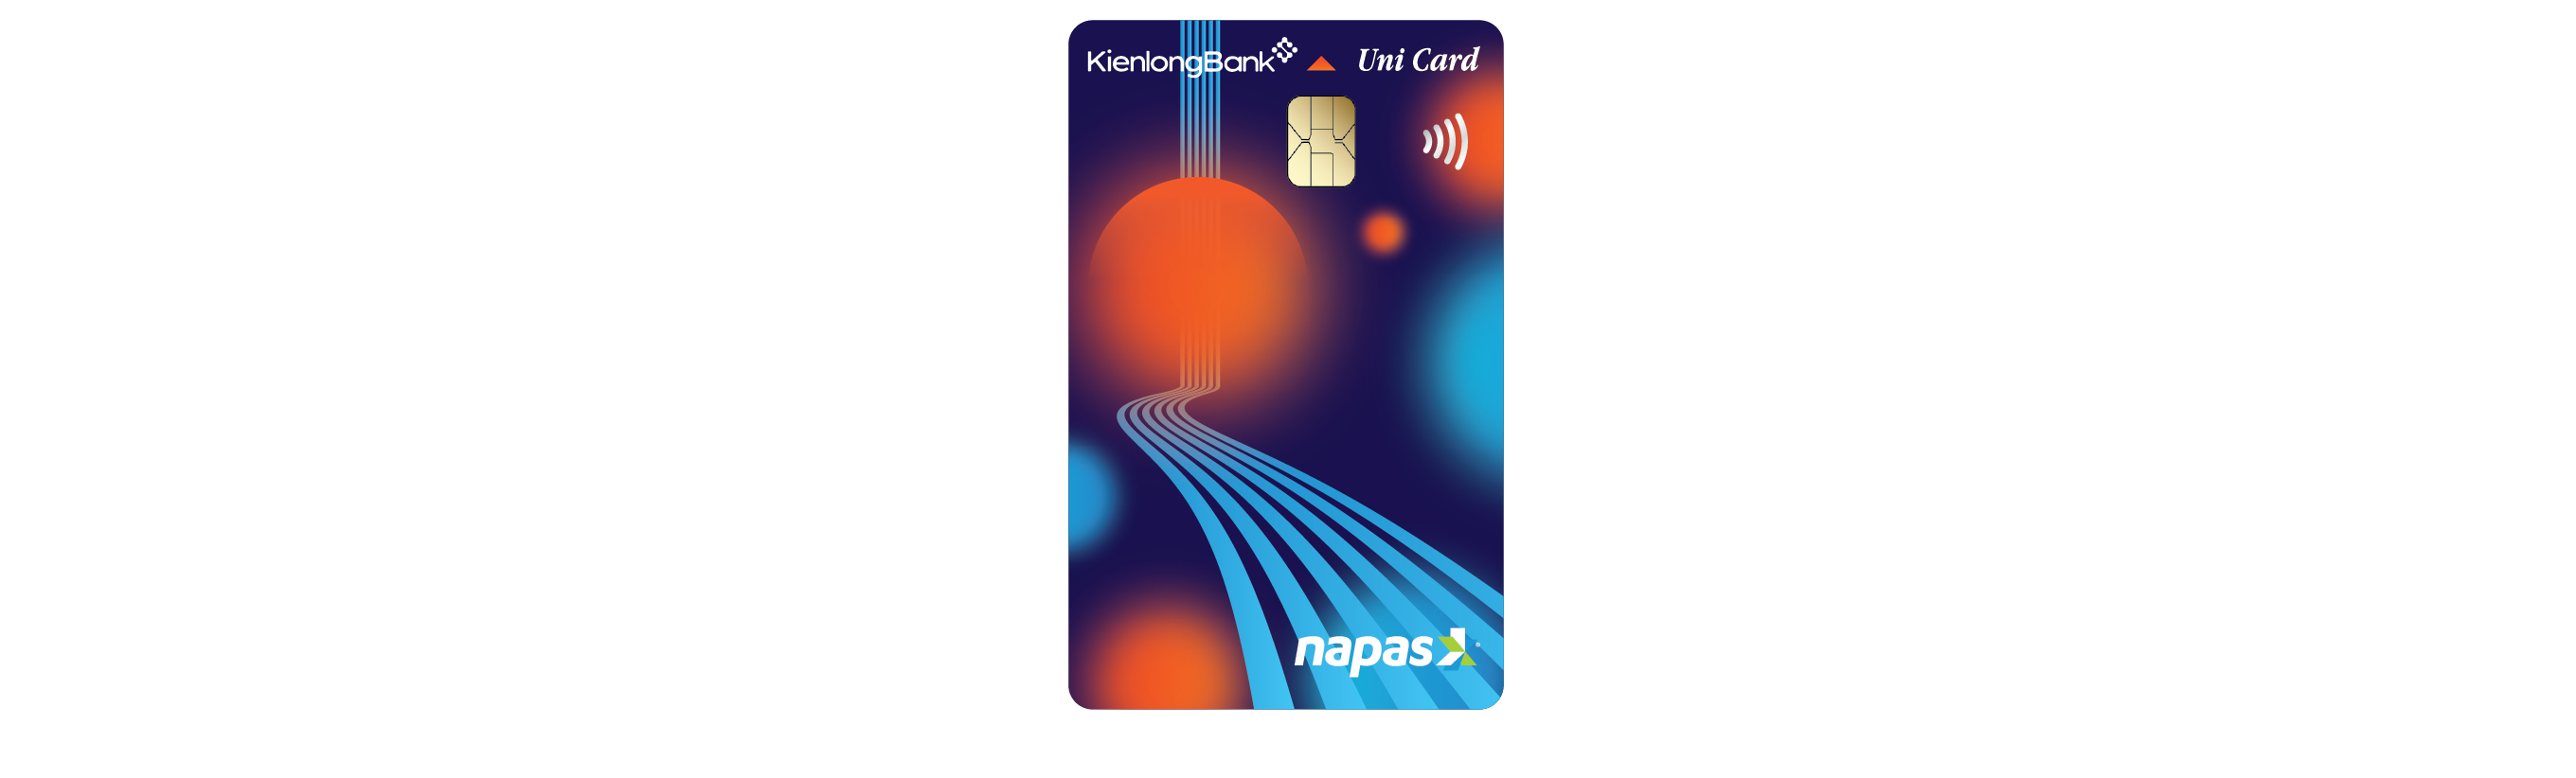 Thẻ KienlongBank Uni Card